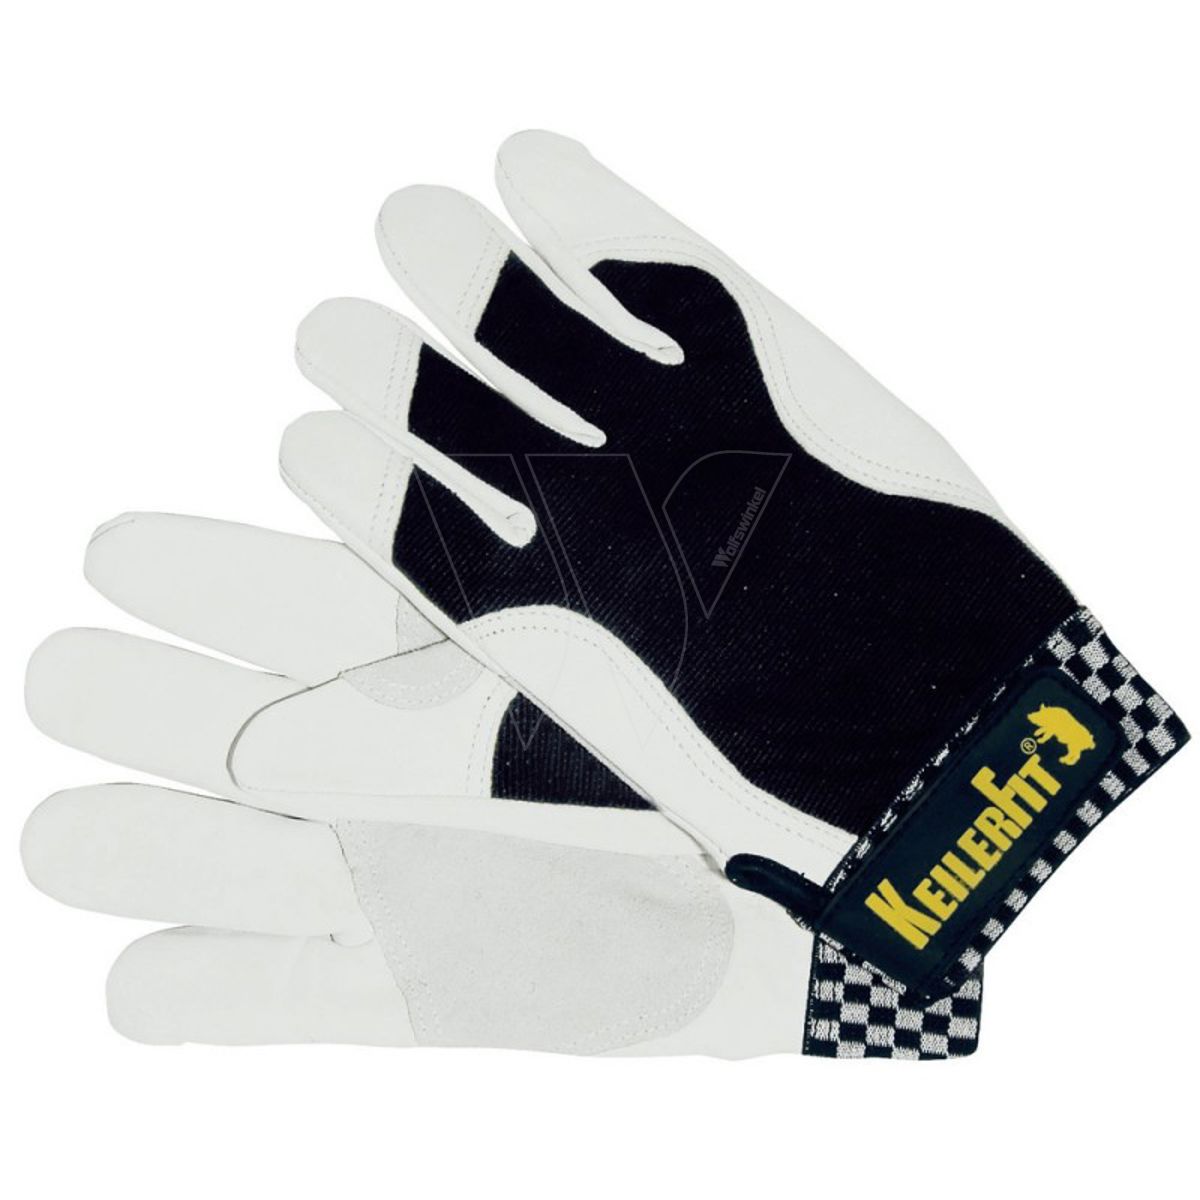 Keilerfit lined work glove leather